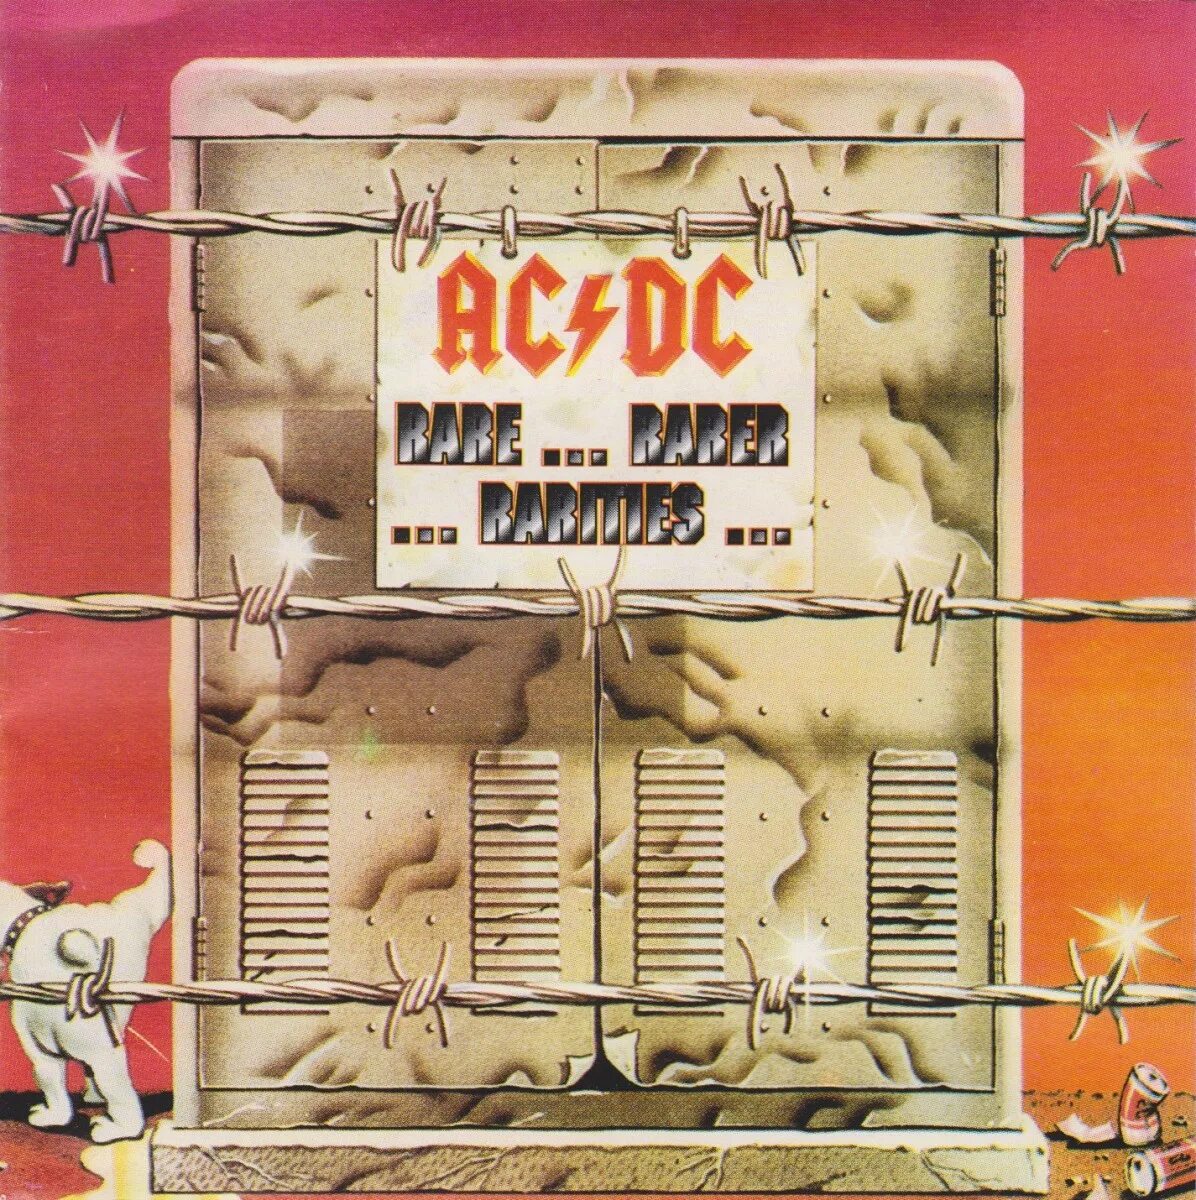 High voltage ac dc. AC DC High Voltage обложка. AC DC High Voltage 1975. AC/DC High Voltage 1975 Australia. AC DC 1991 барабаны.